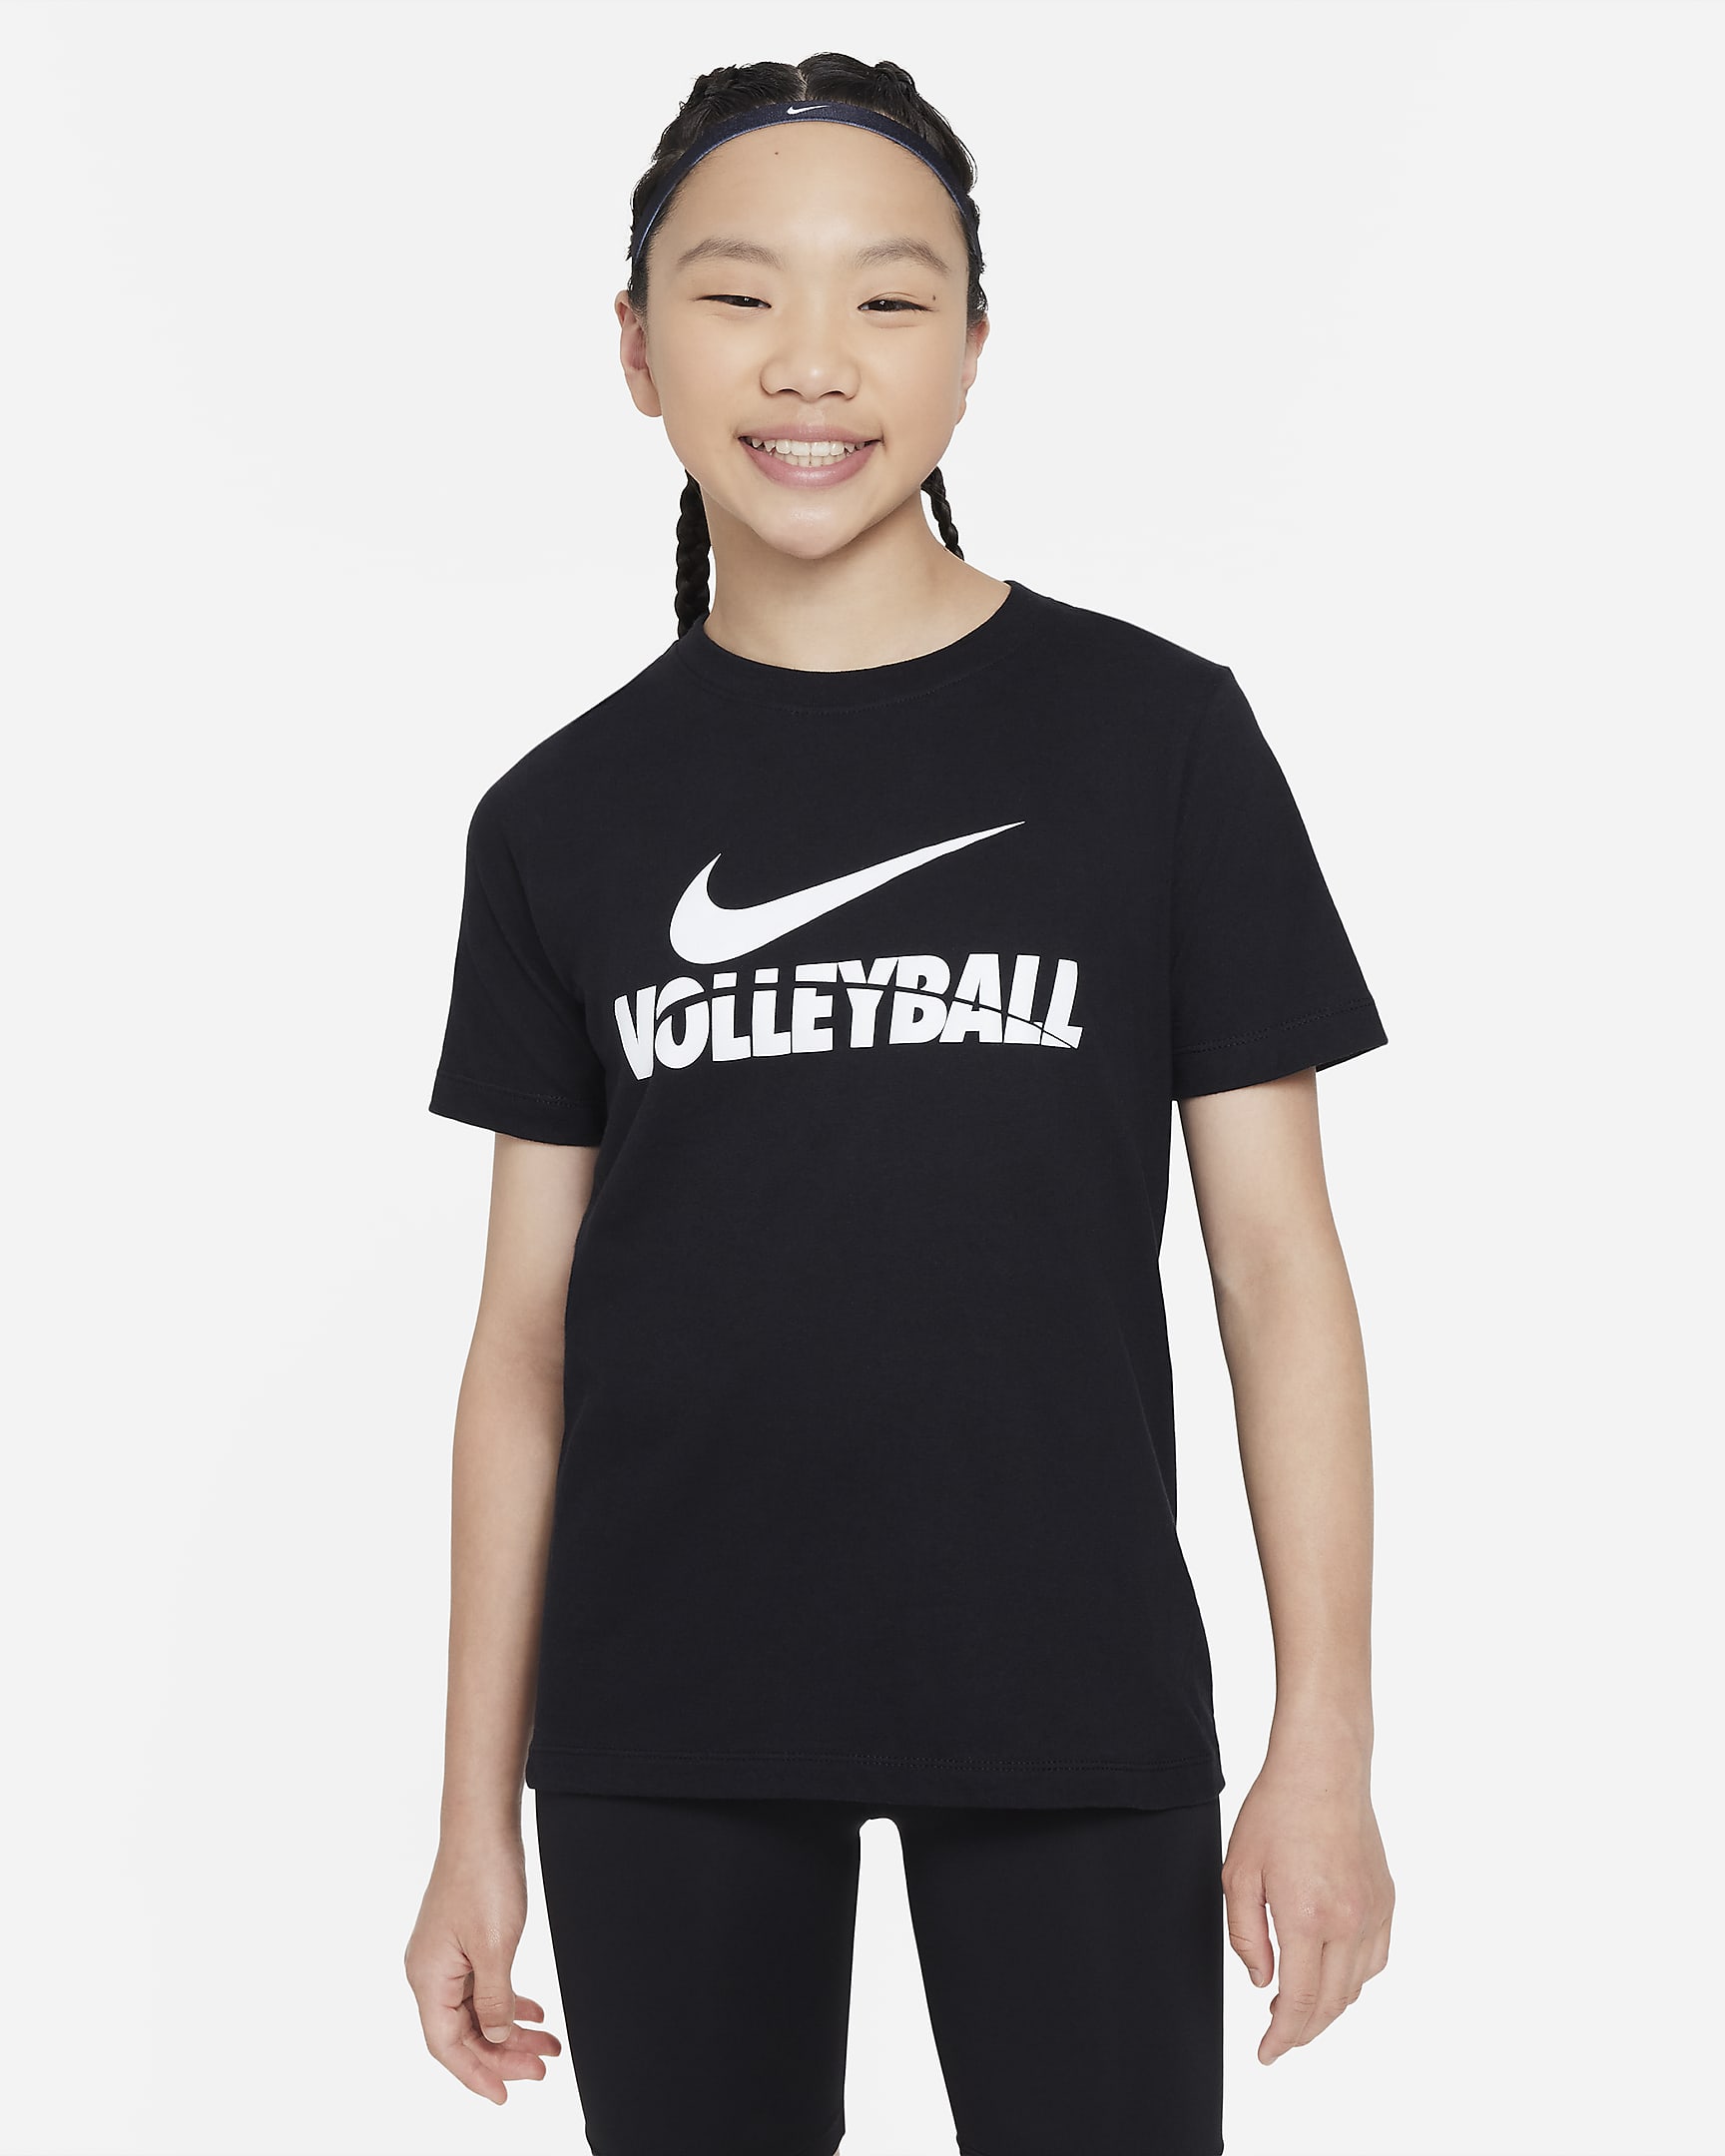 Playera para niño talla grande Nike Volleyball. Nike.com